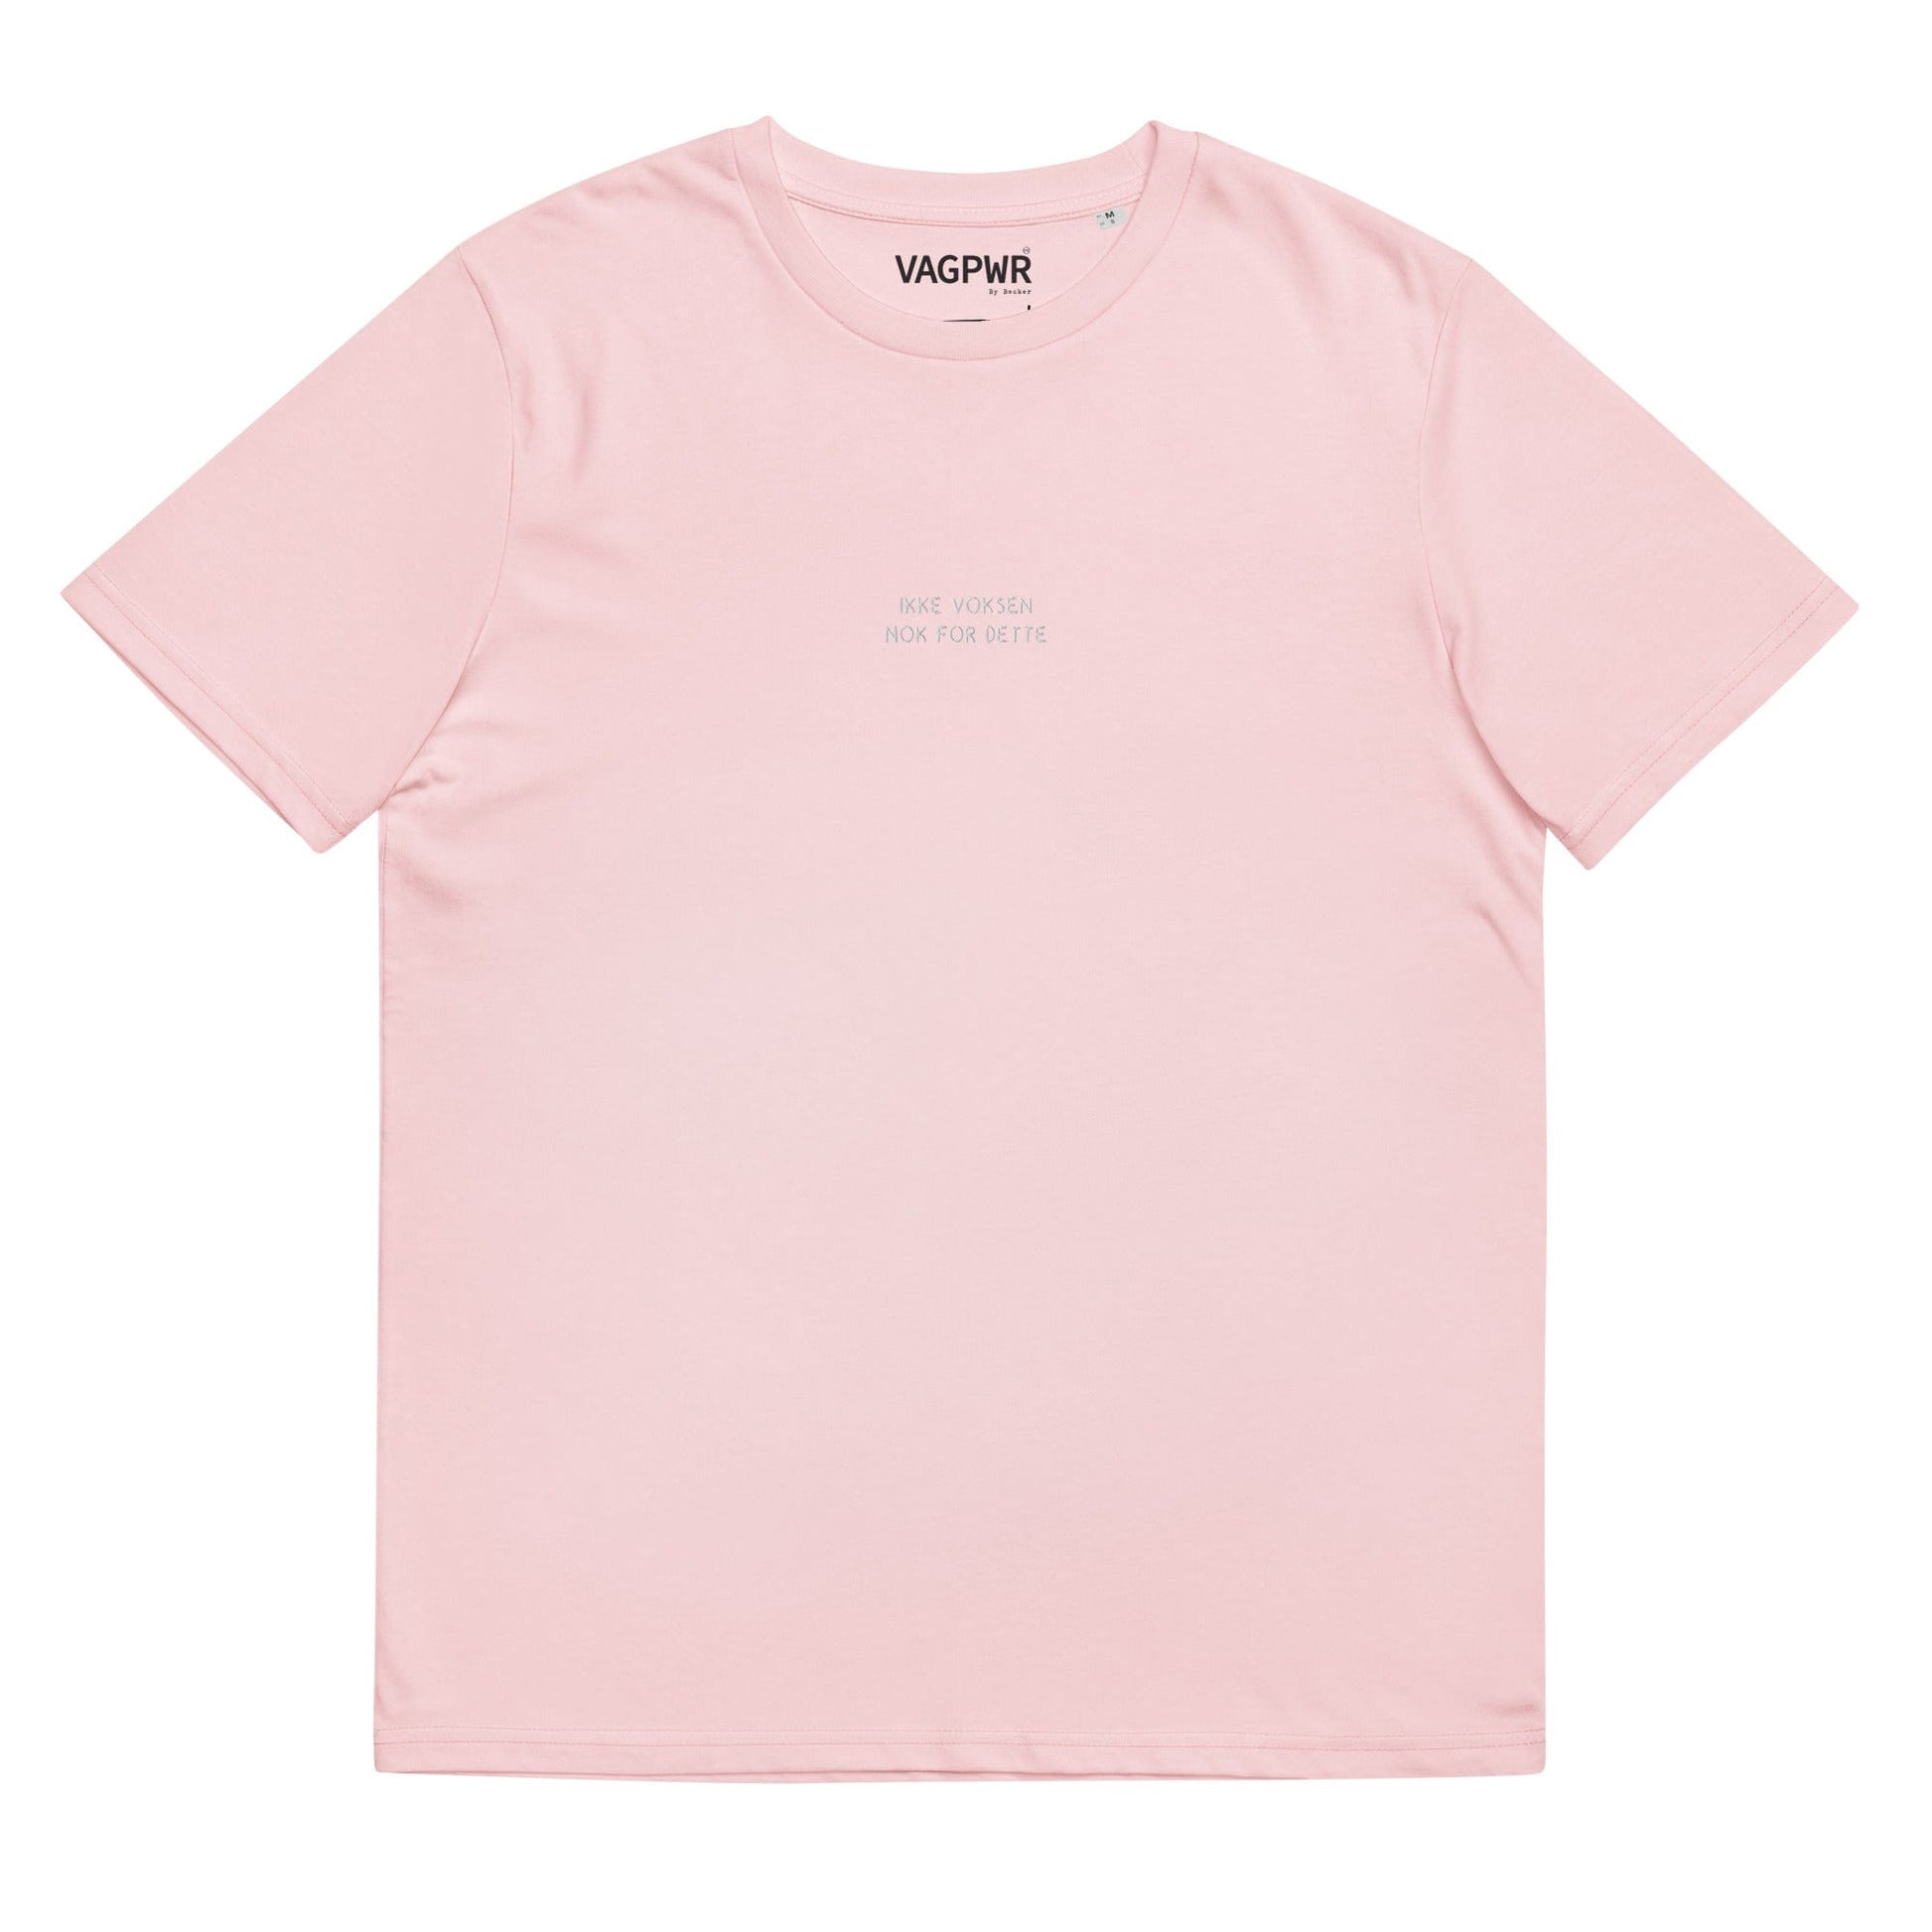 VAGPWR Cotton Pink / S Ikke voksen nok - Unisex organic cotton t-shirt